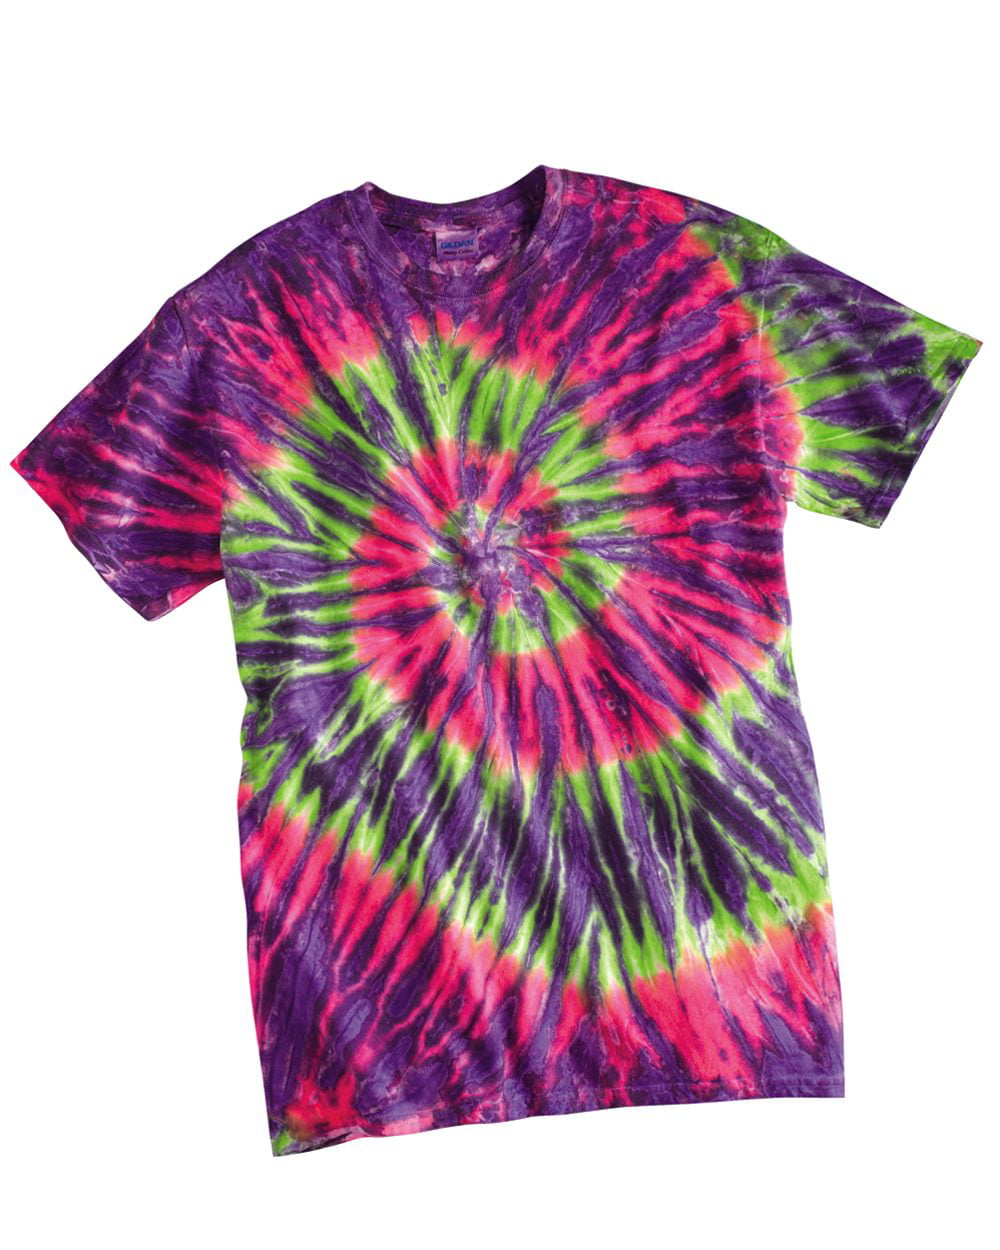 Youth Ripple Tie Dye T-Shirt - Walmart.com.